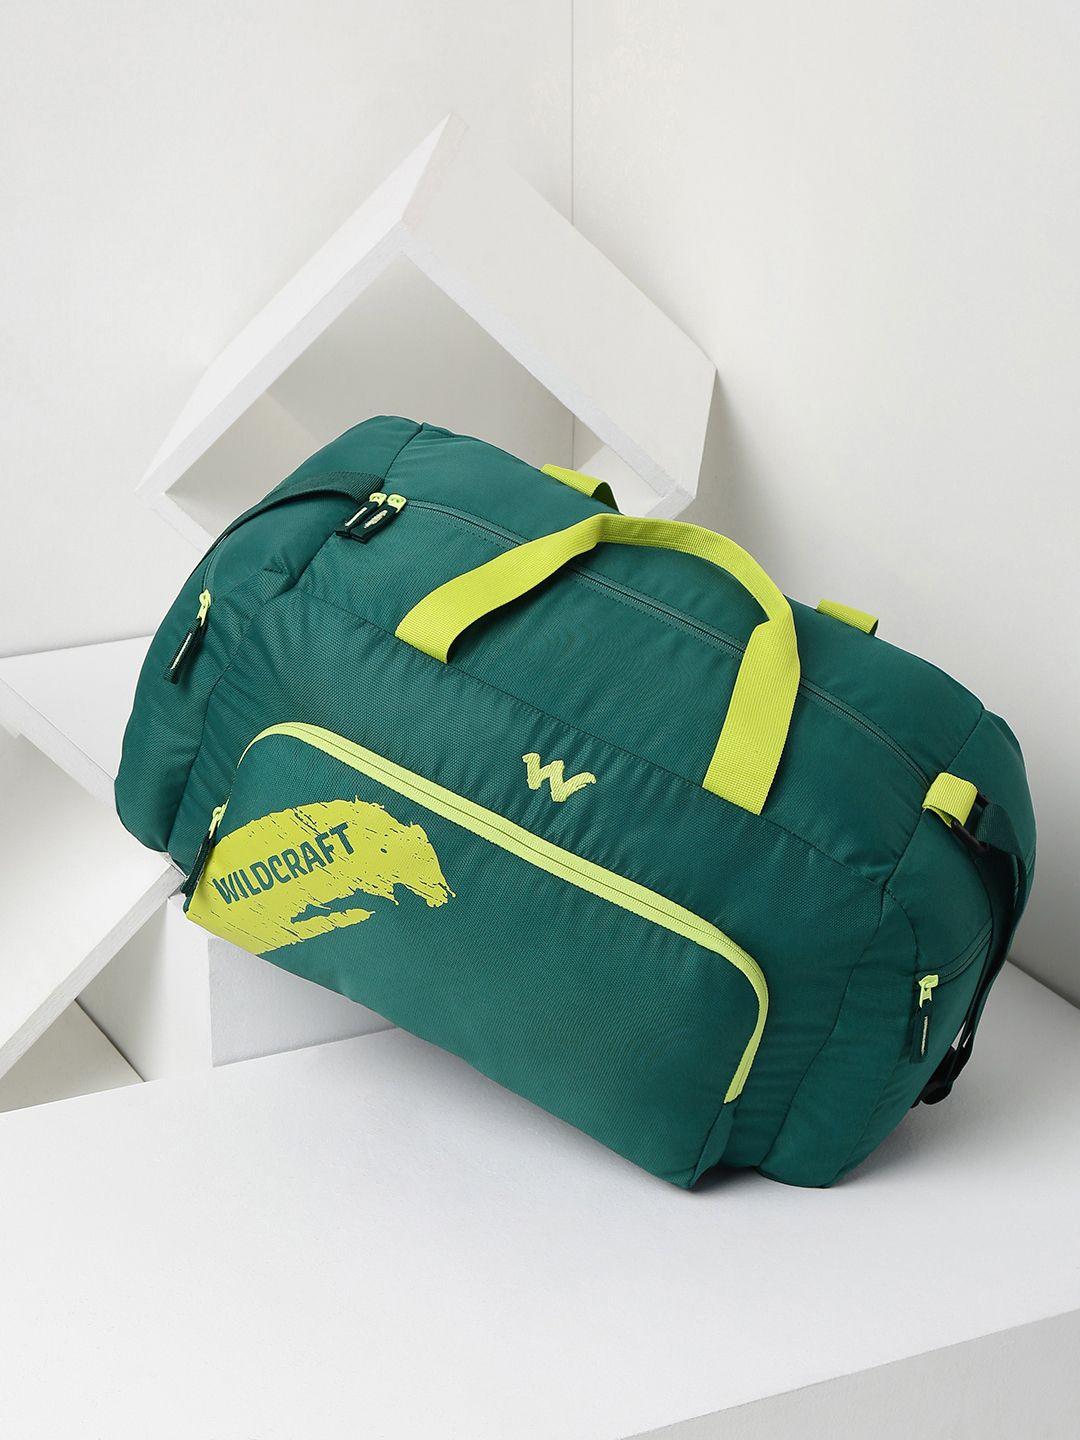 wildcraft unisex green printed nova duf 40 duffel bag